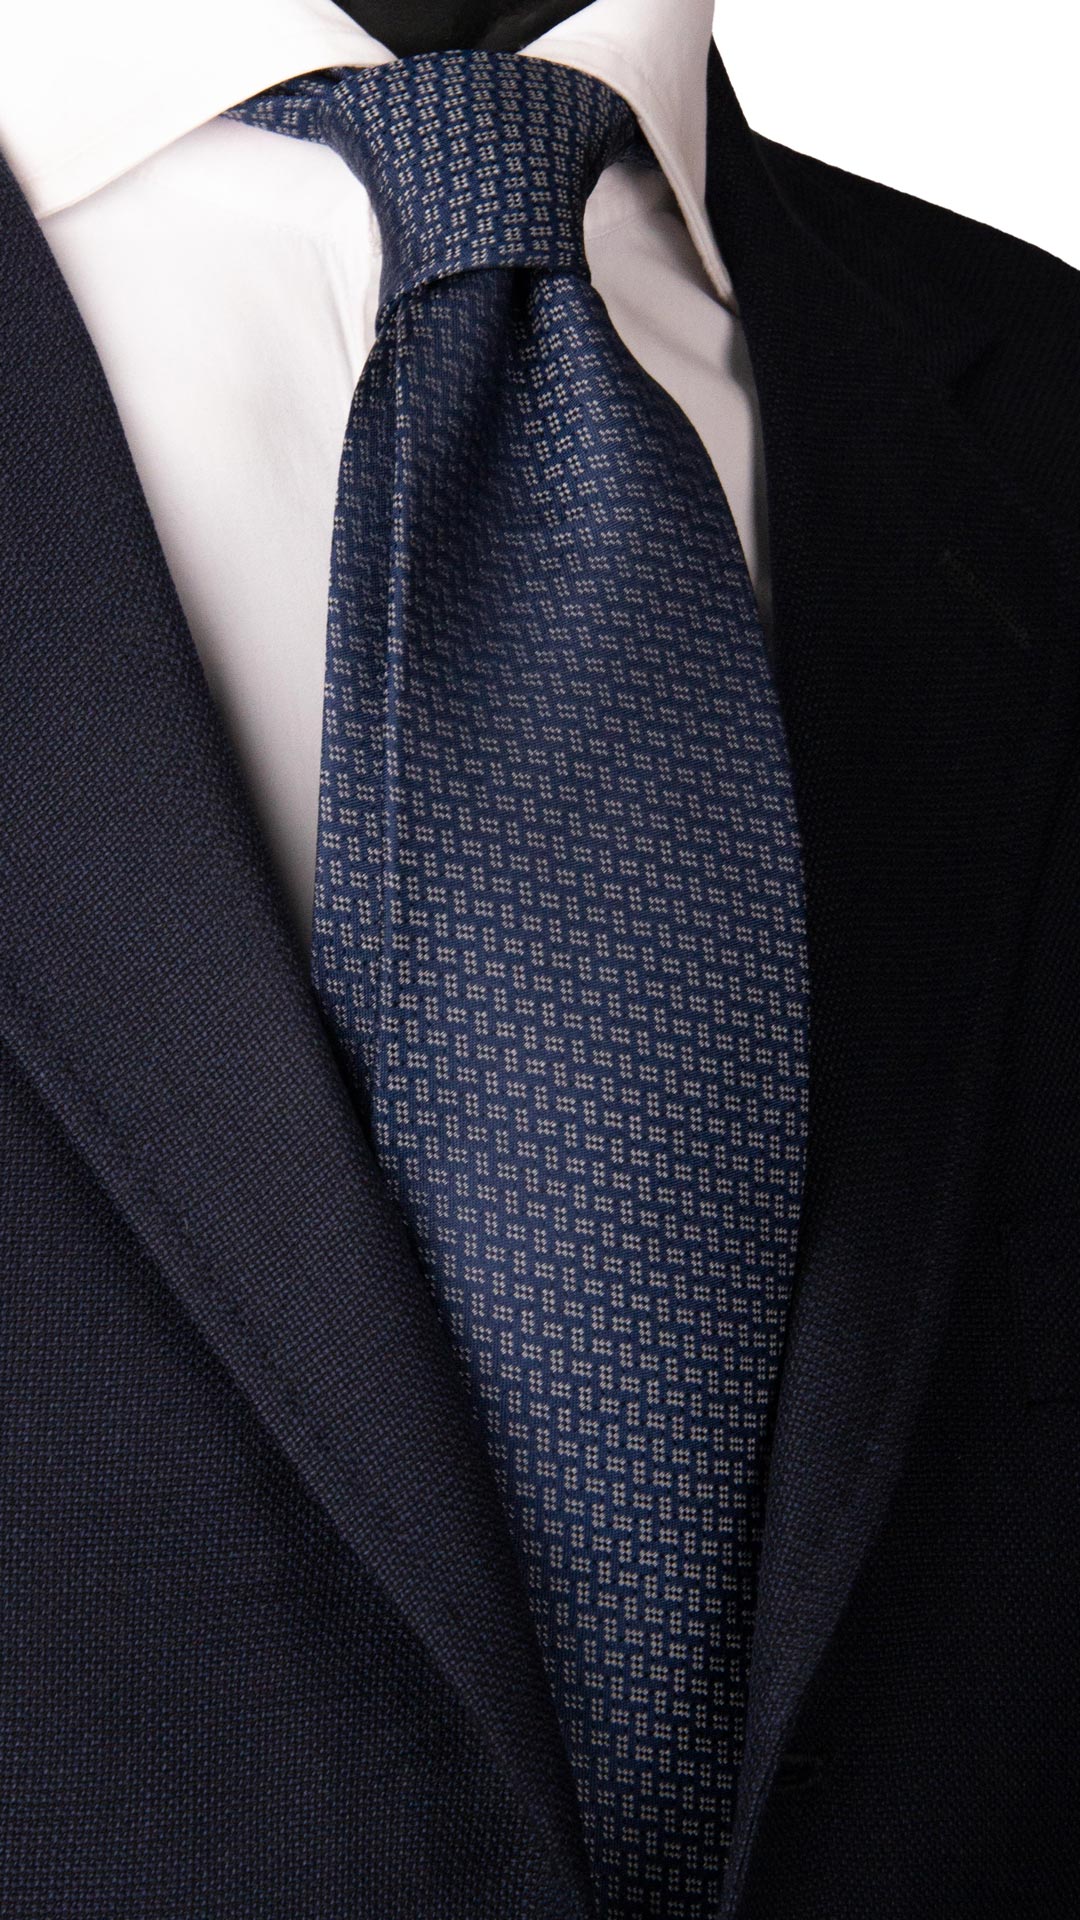 Cravatta da Cerimonia di Seta Blu Fantasia Grigia CY2378 Made in Itay Graffeo Cravatte